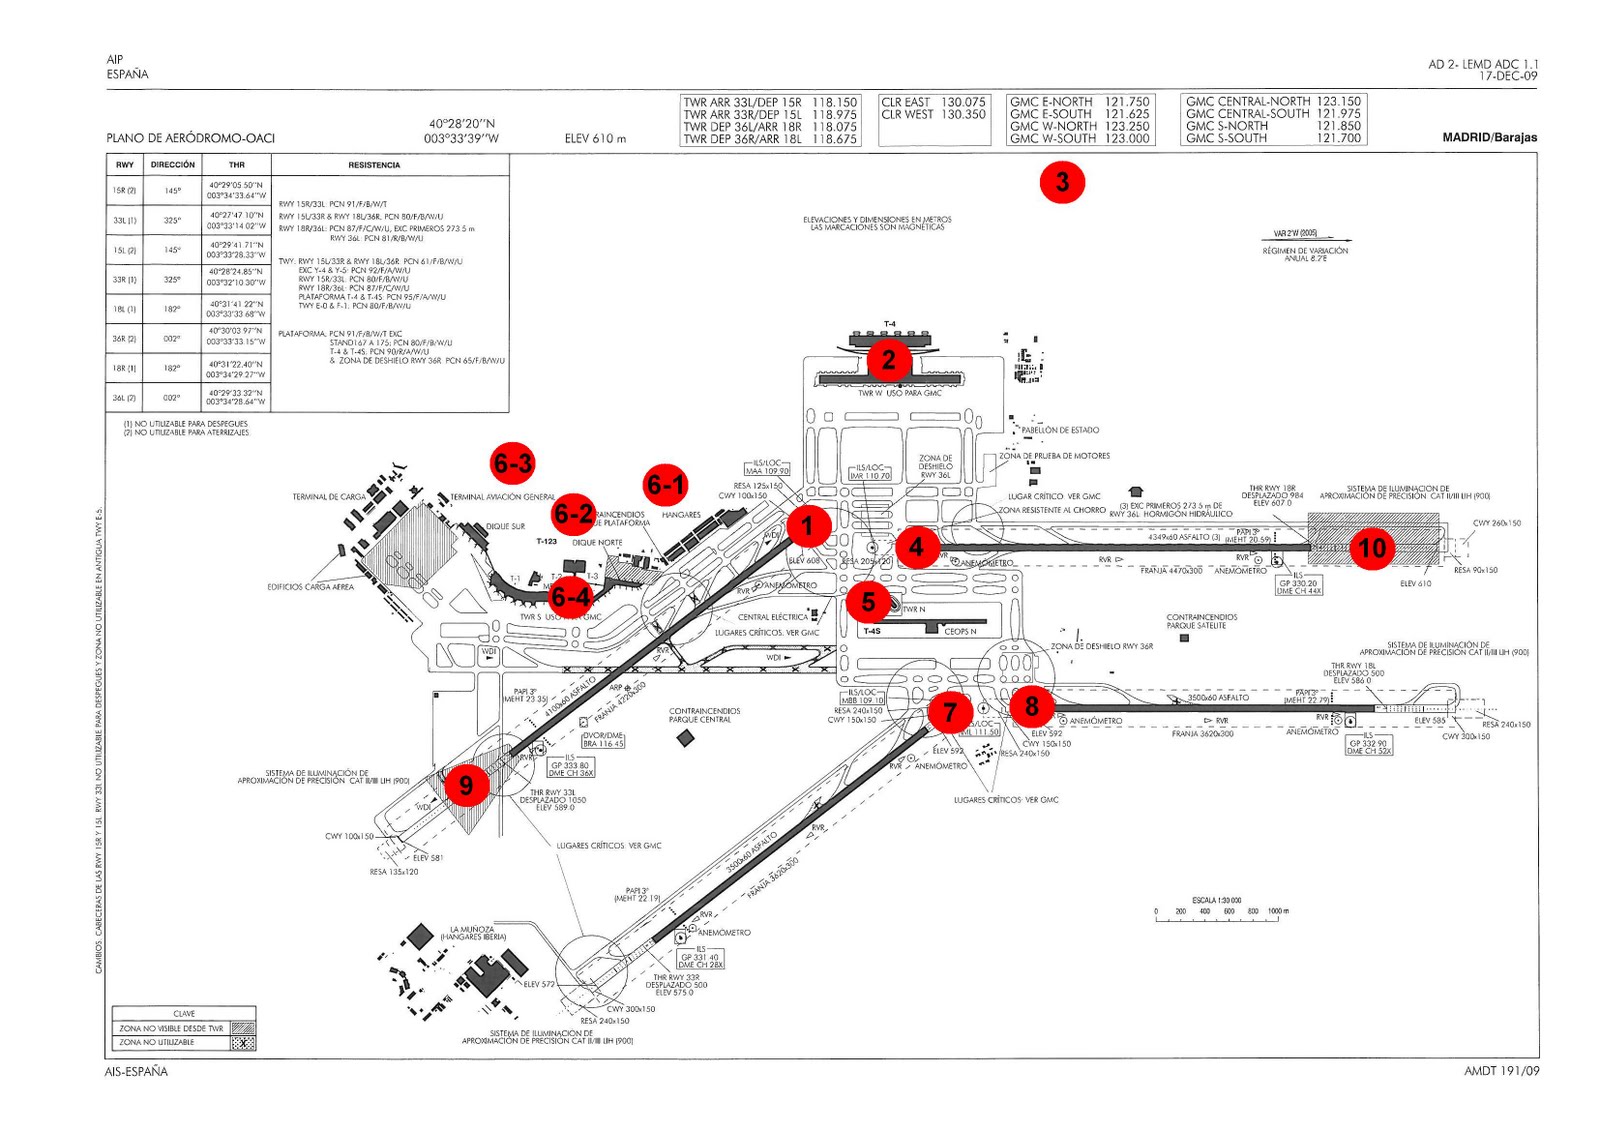 Las mentiras de Barajas: MADRID-BARAJAS INTERNATIONAL AIRPORT HOT SPOTS MAP